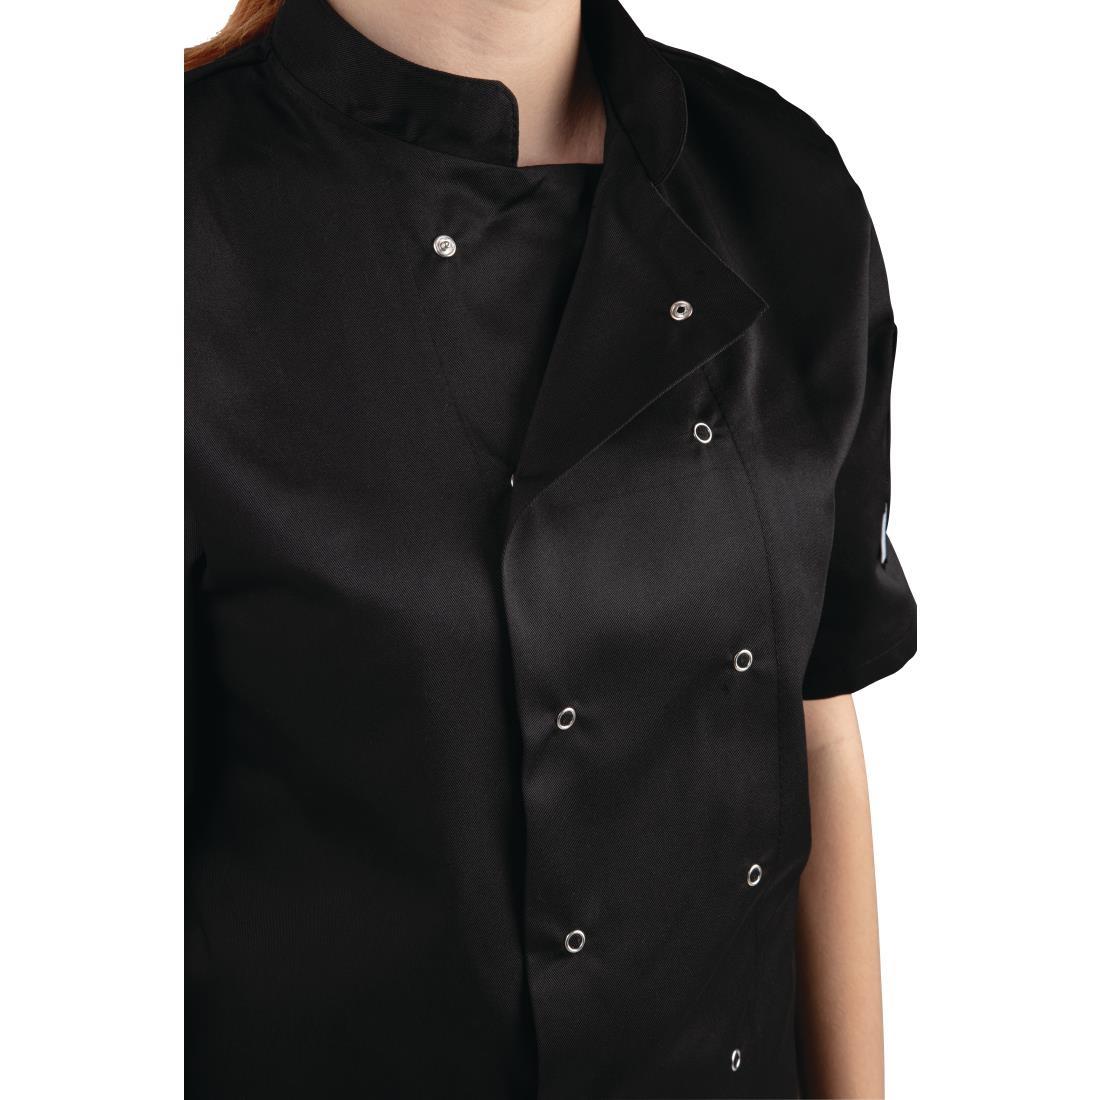 Whites Vegas Unisex Chefs Jacket Short Sleeve Black S - A439-S  - 2